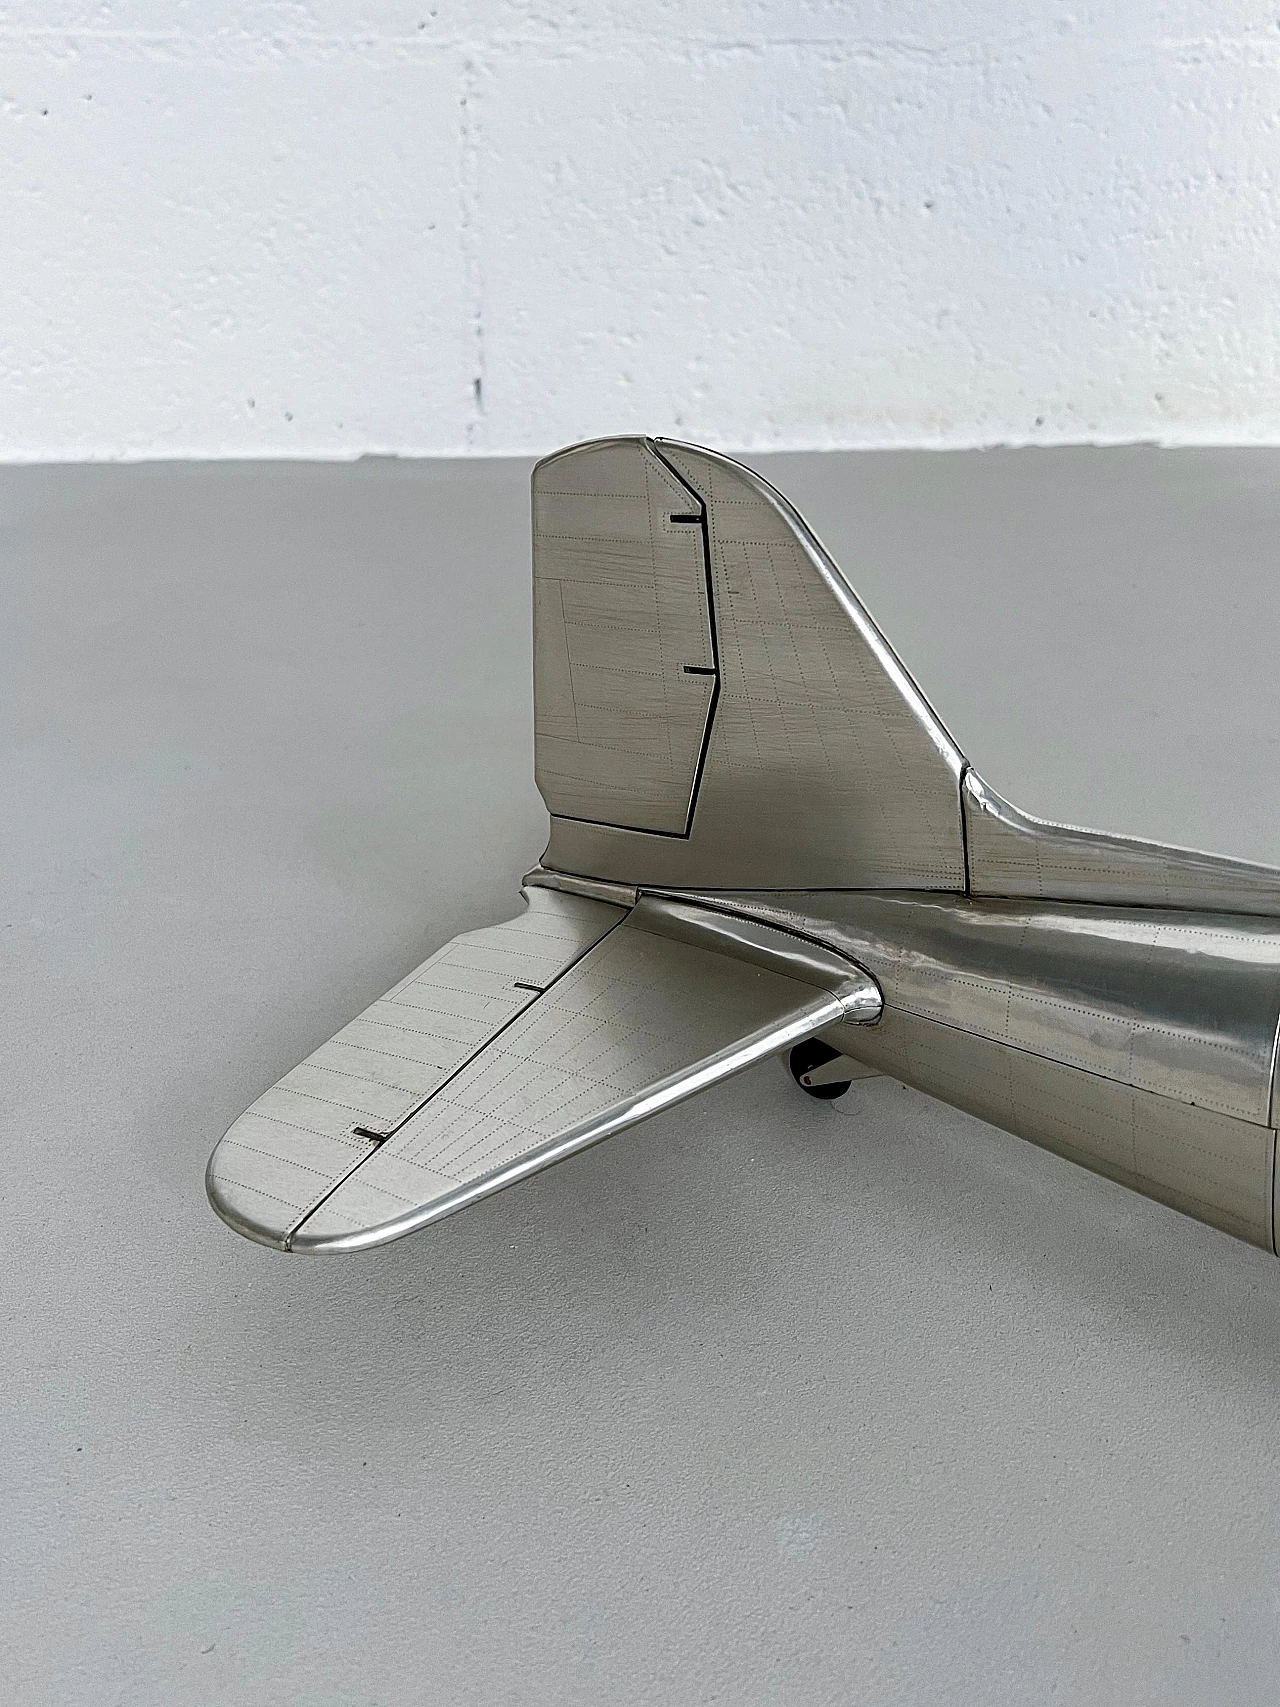 Metal Douglas DC-3 airplane model 10